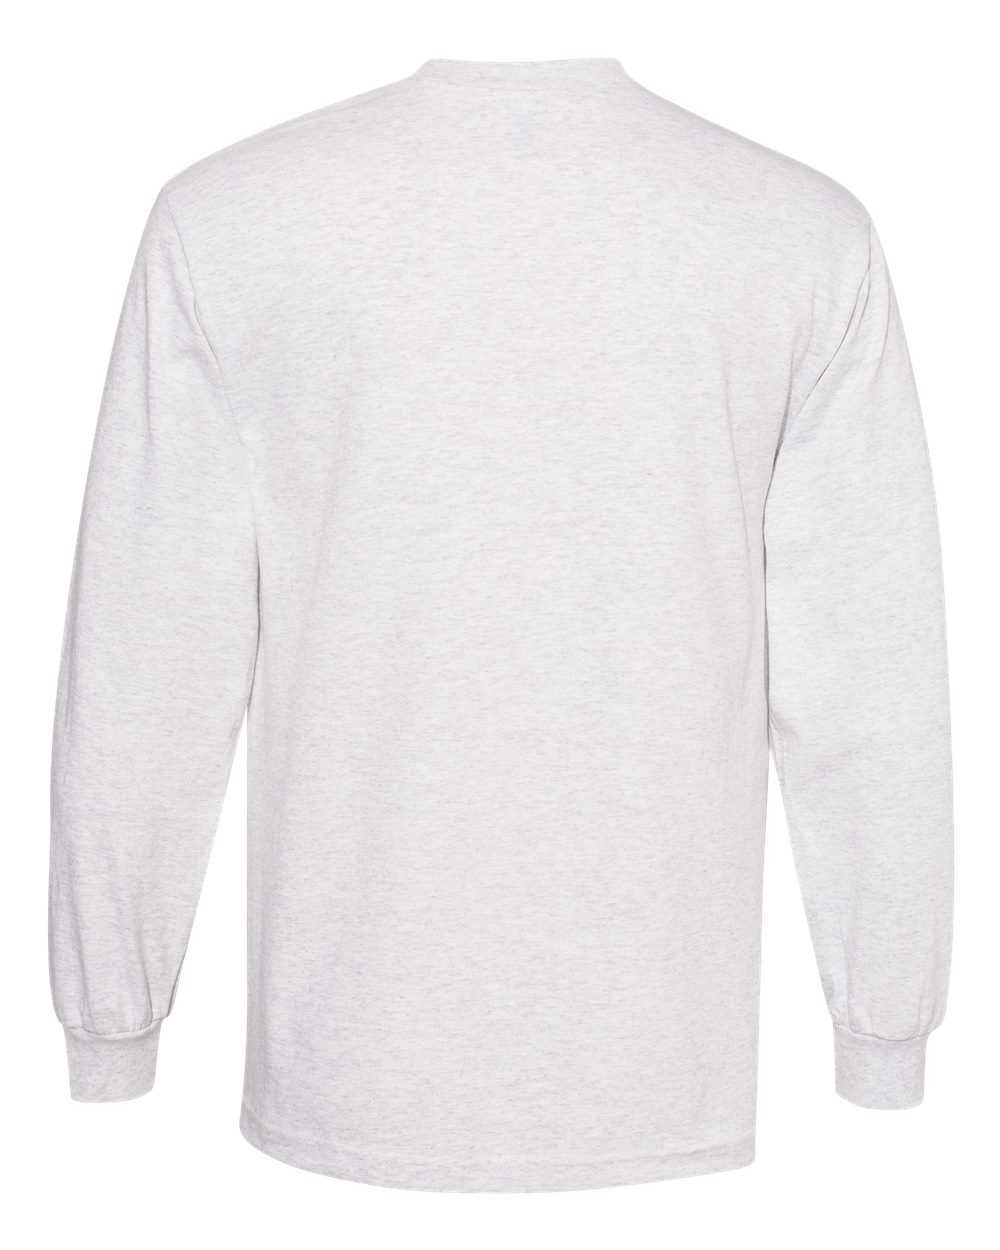 American Apparel 1304 Unisex Heavyweight Cotton Long Sleeve T-Shirt - Ash - HIT a Double